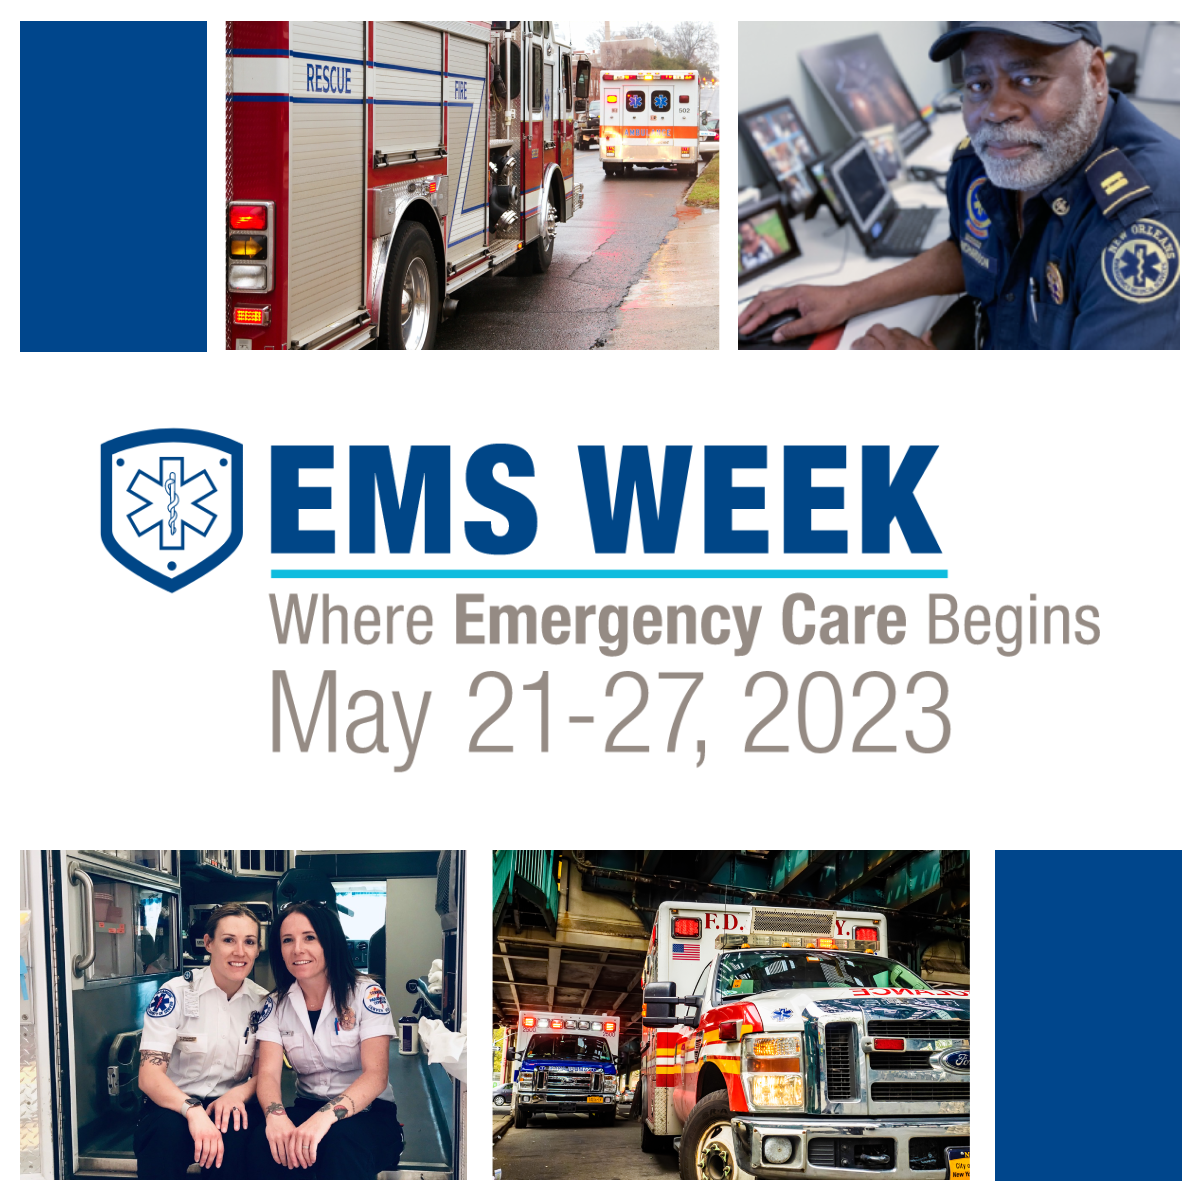 ems week